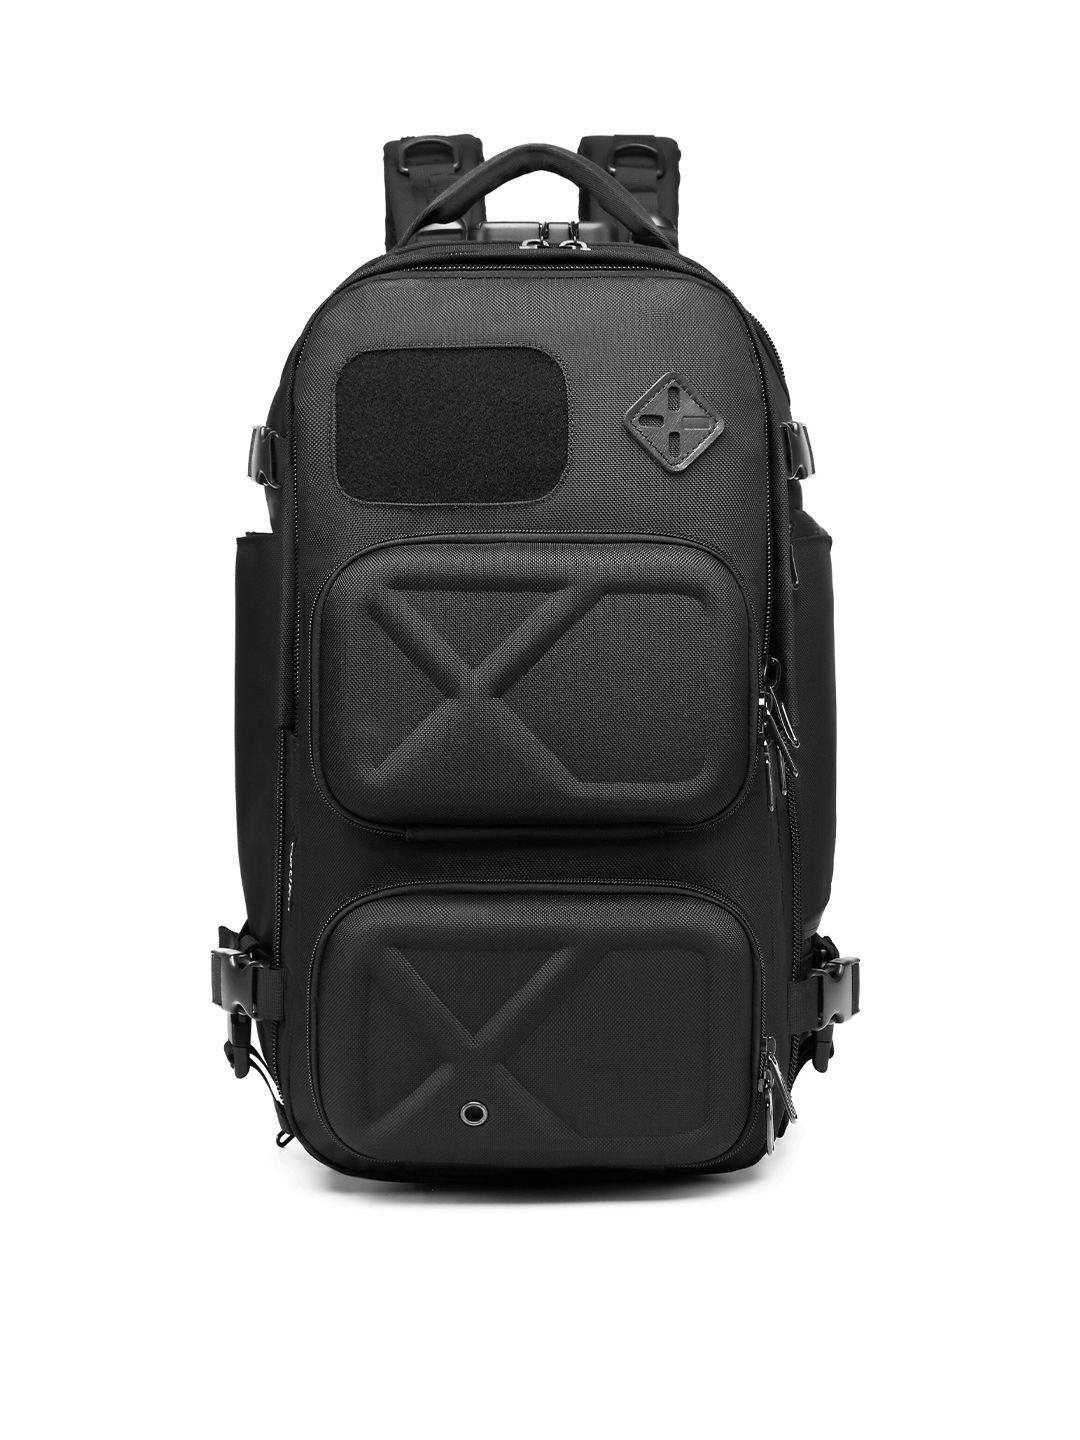 ozuko 9309l y range soft case backpack